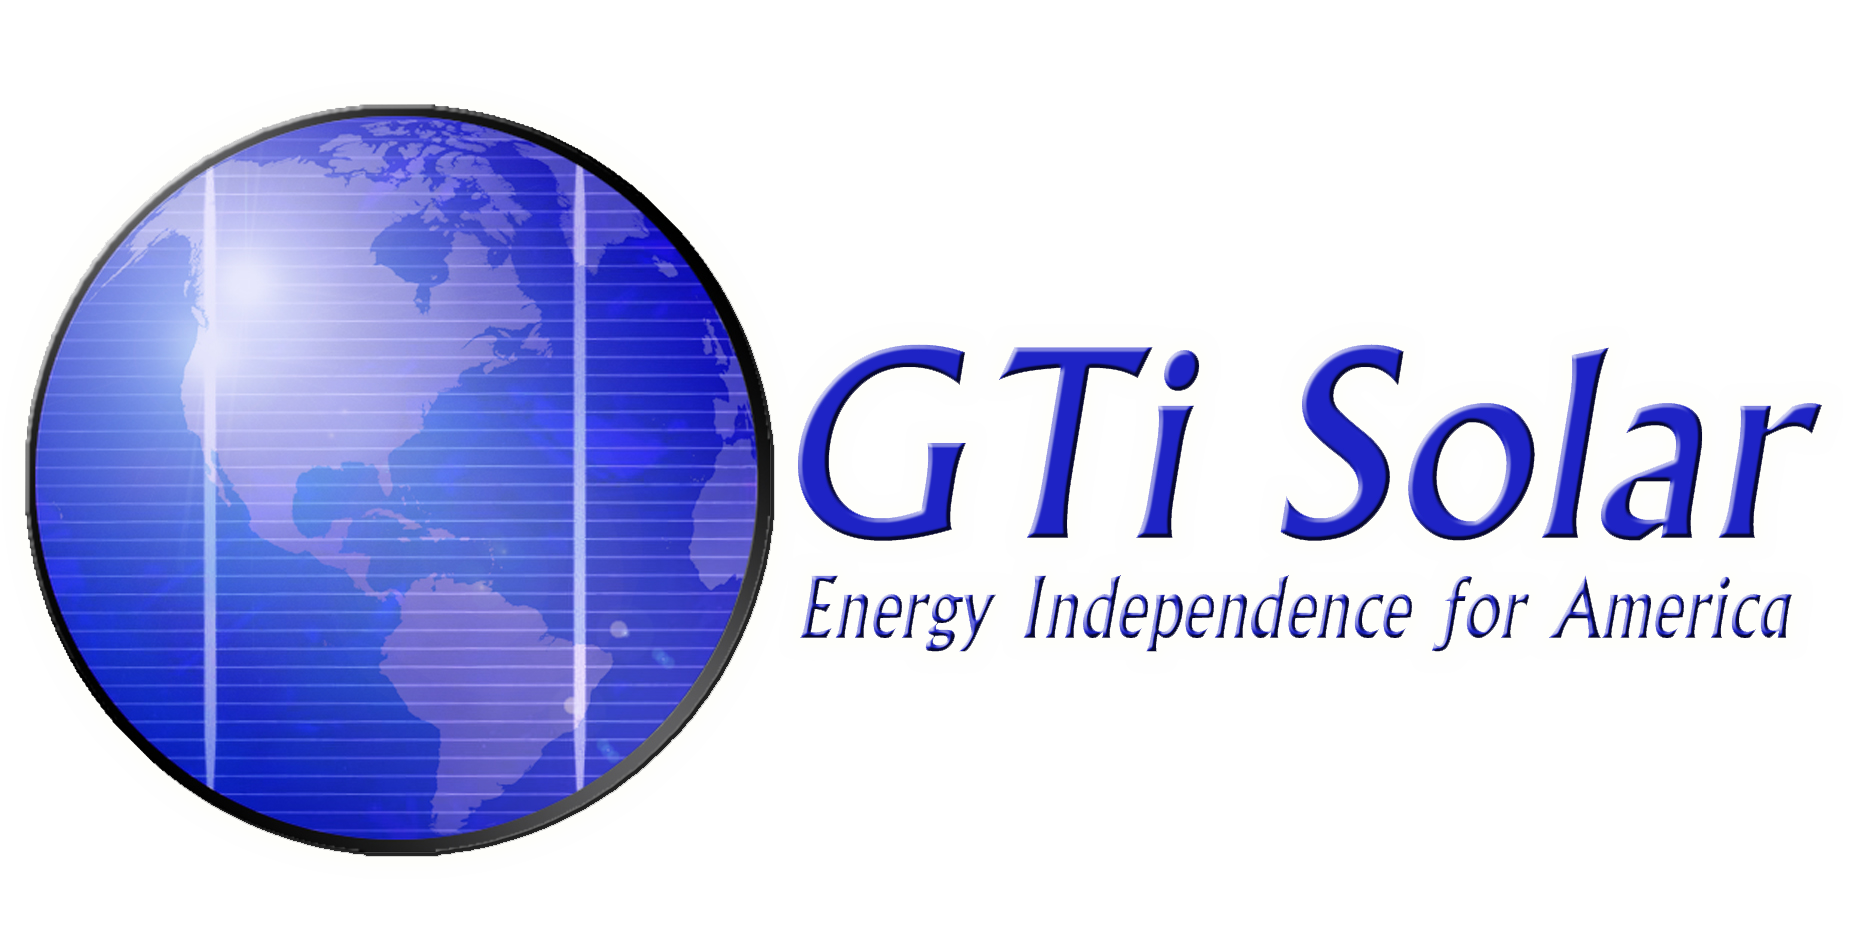 GTi Solar Construction